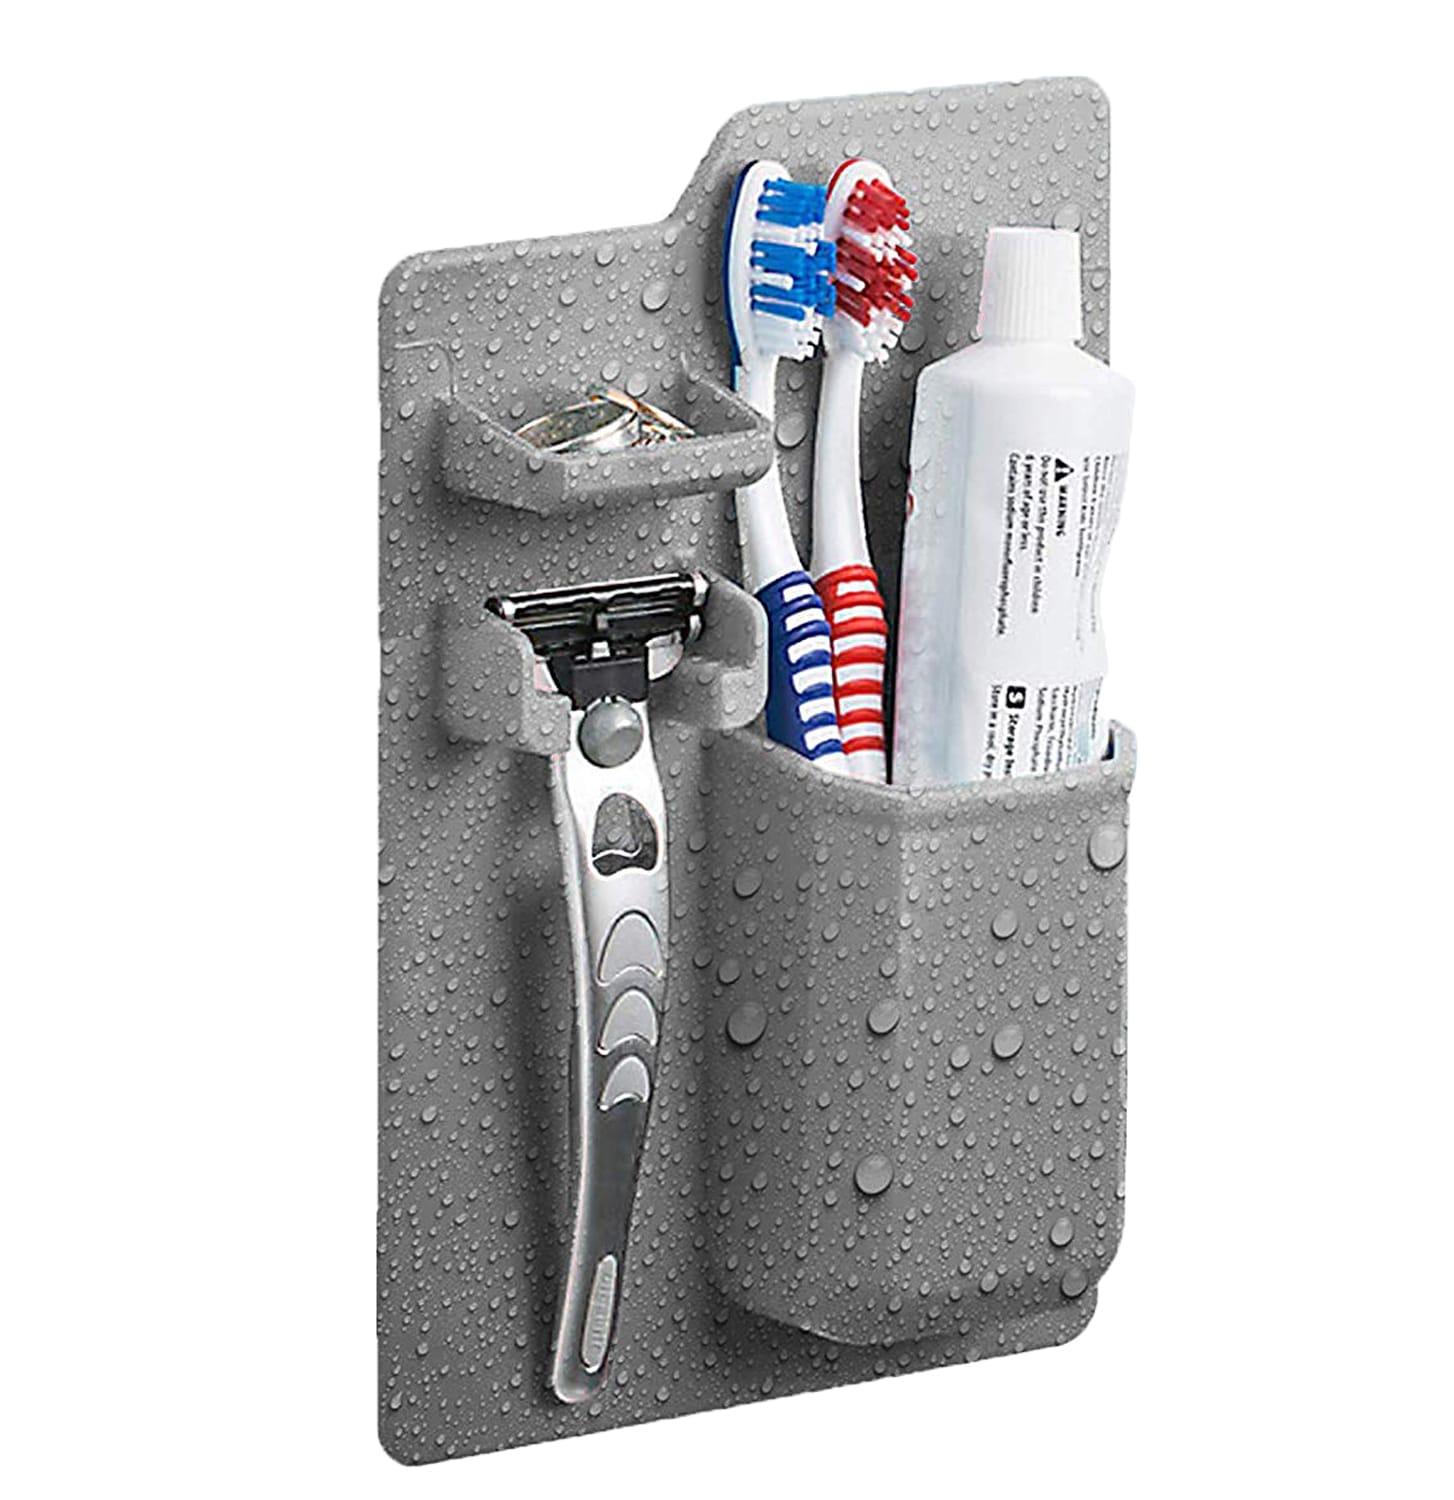 Wall Mounted Bathroom Toothbrush and Bathroom Organizer